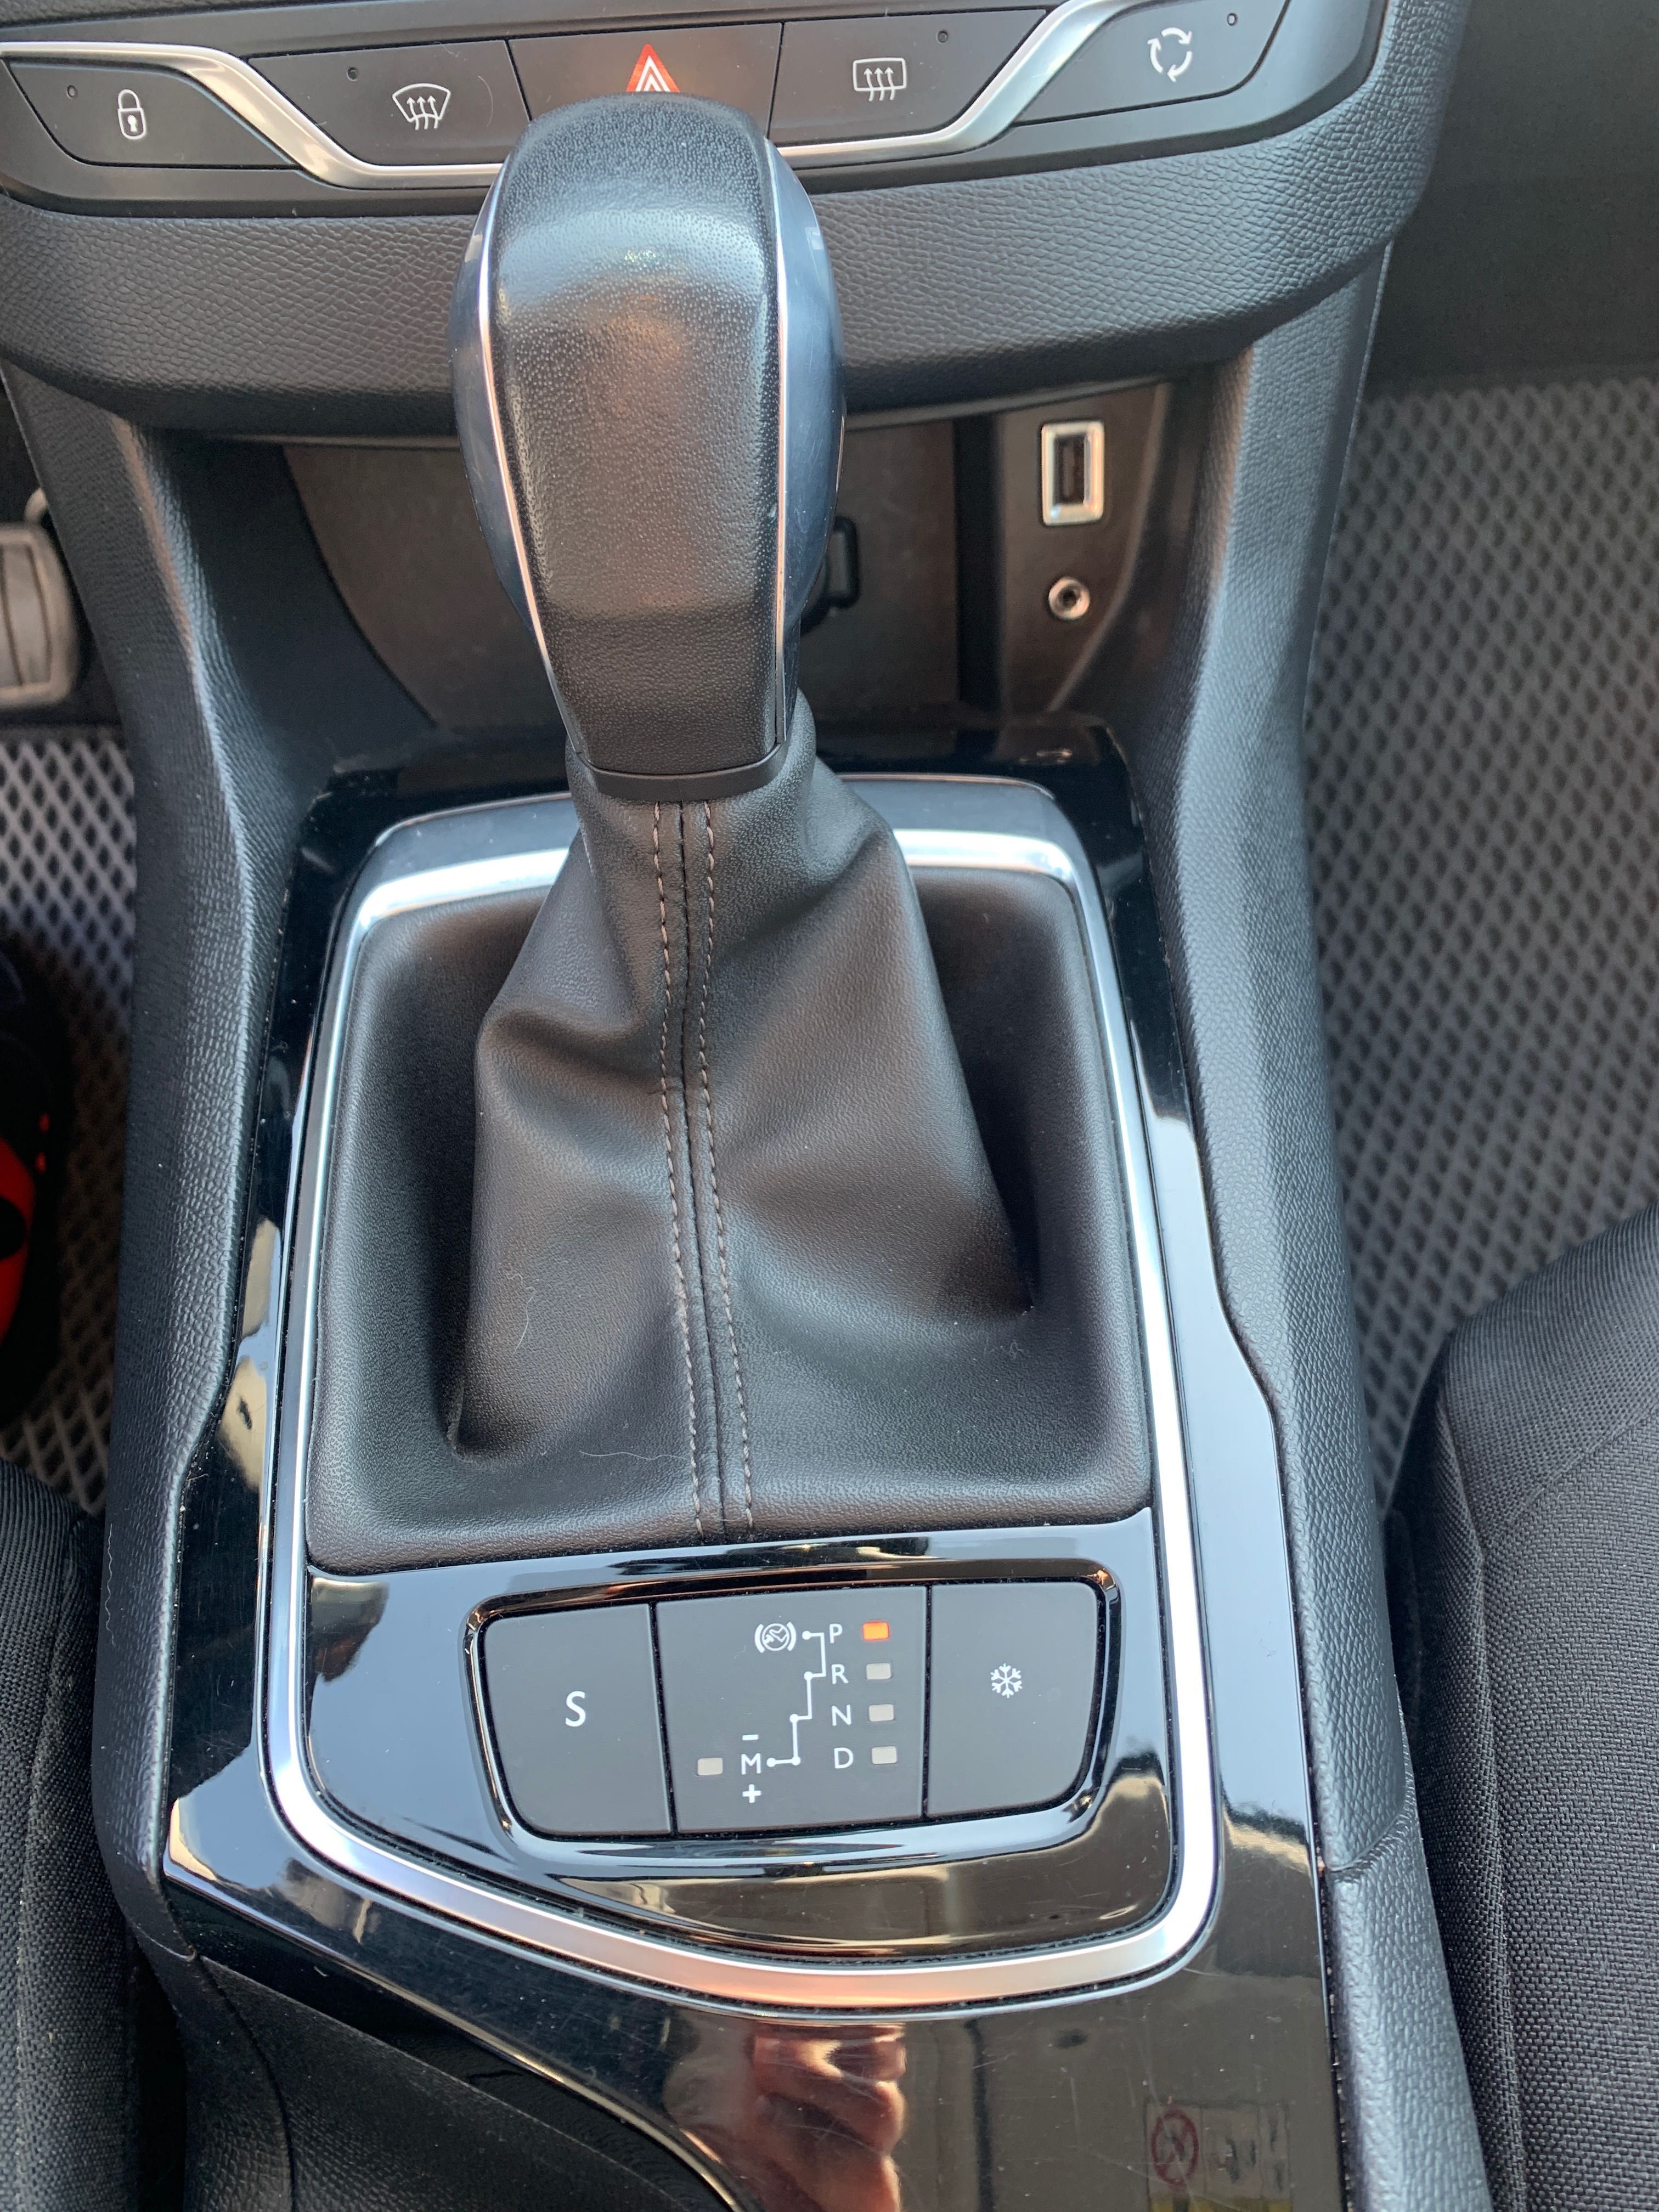 Peugeot 308 2016 год, 1.6 дизель, автомат